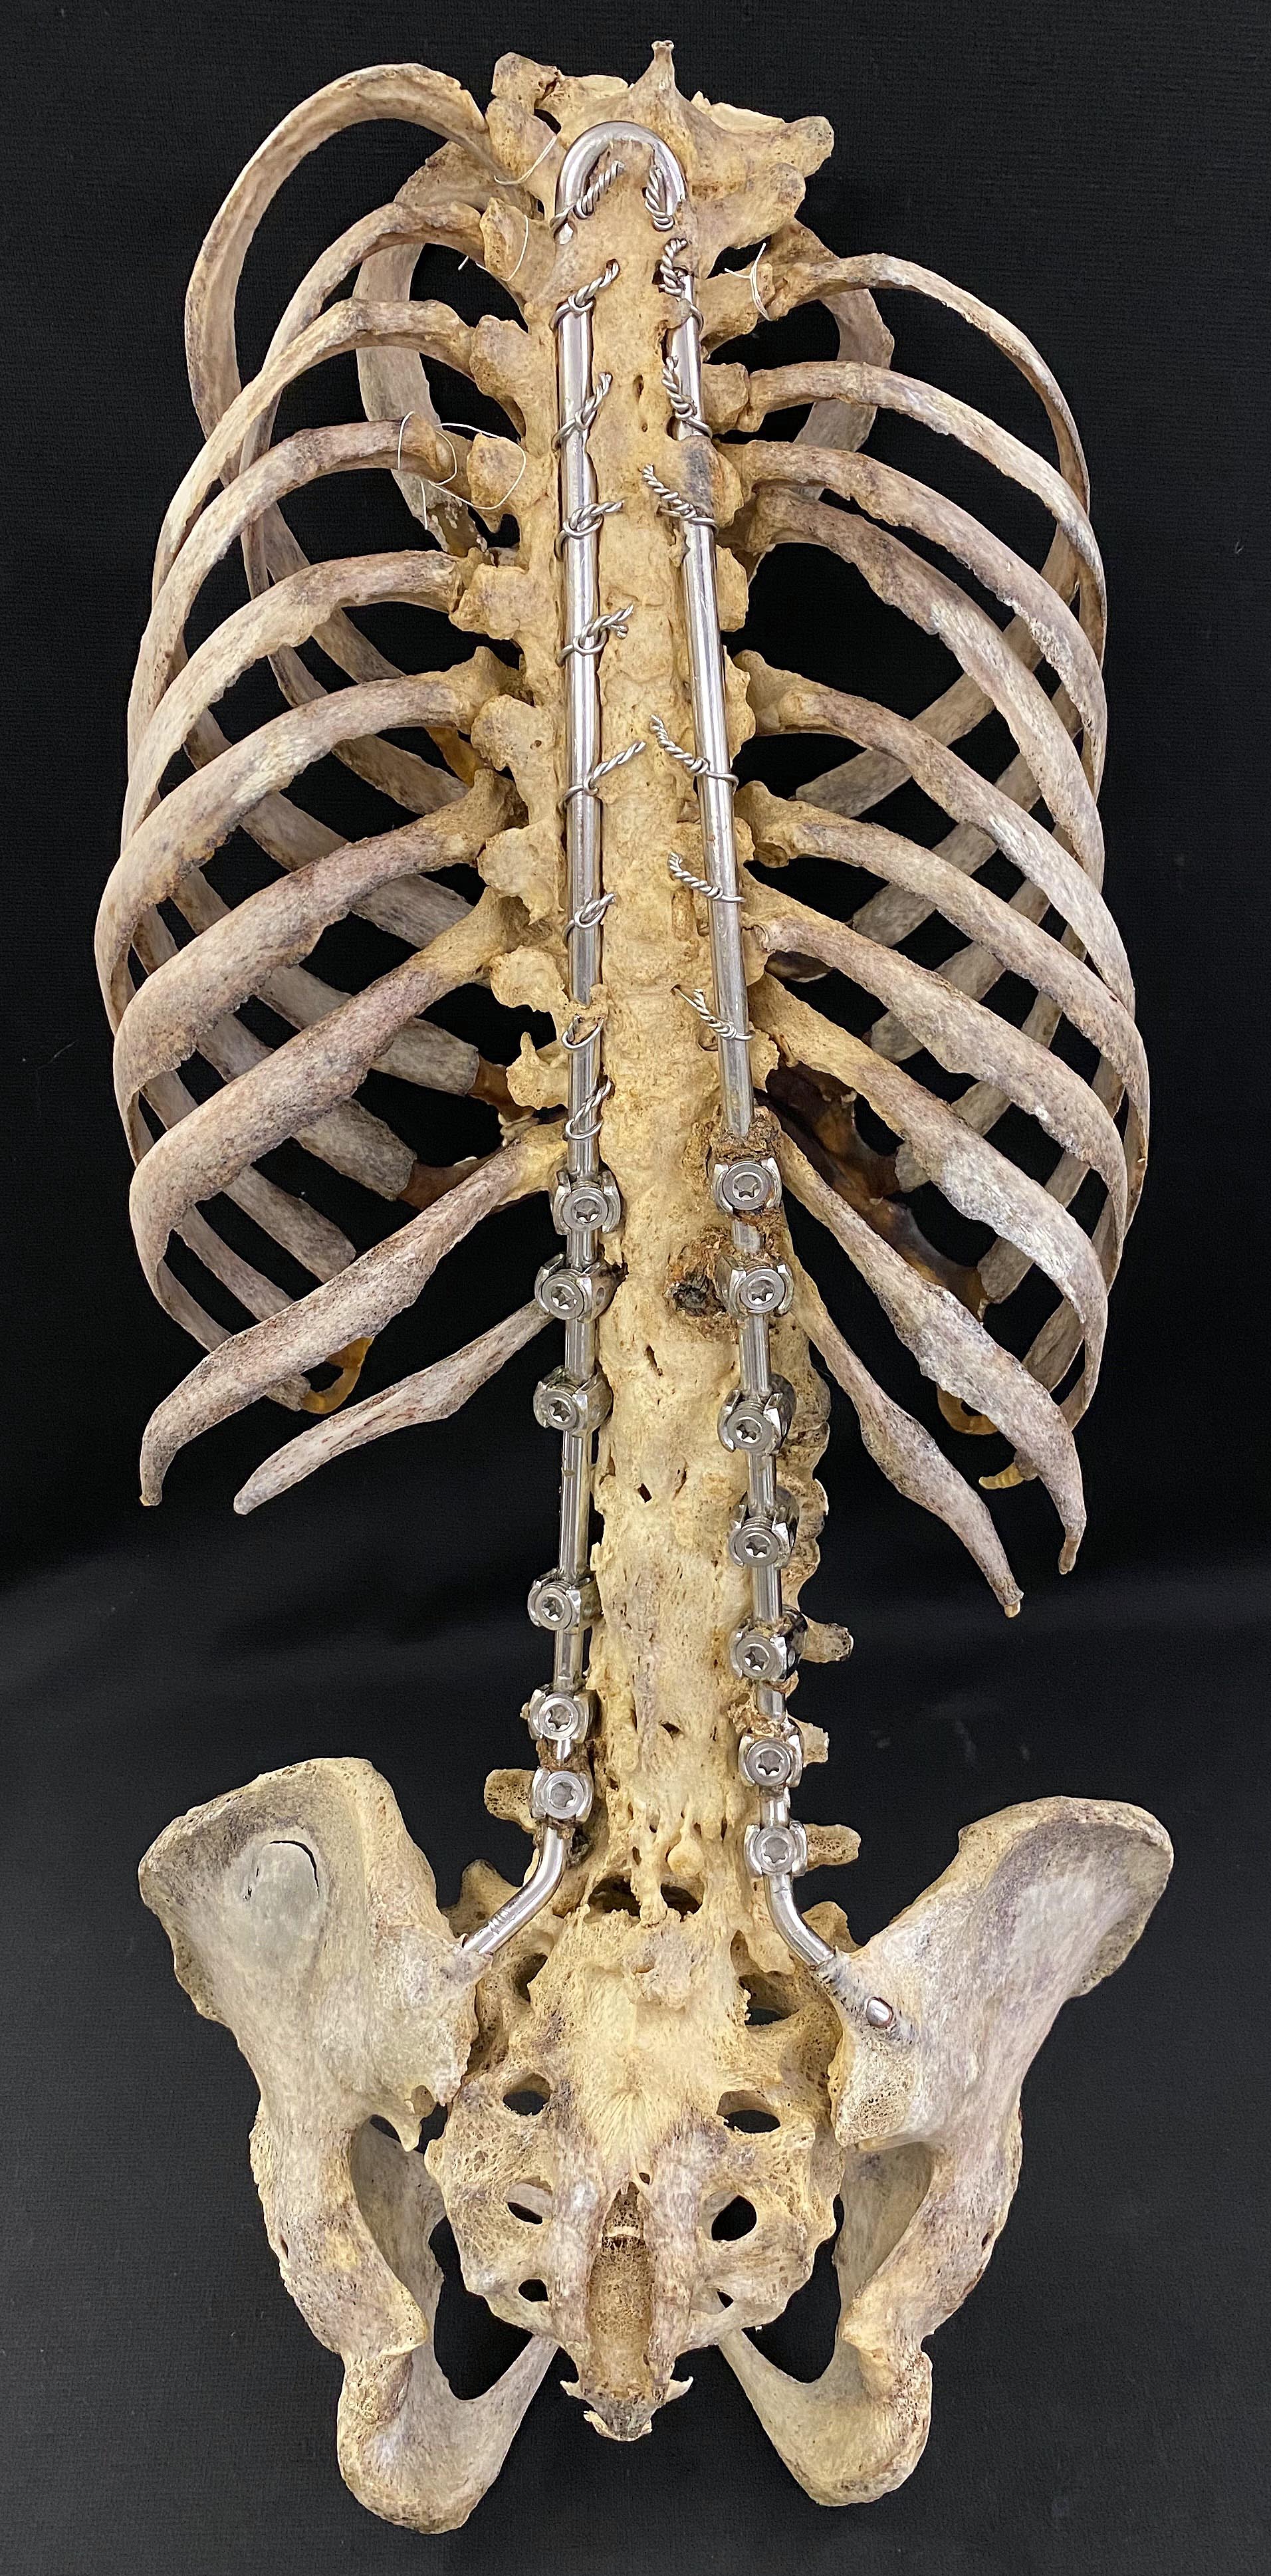 skeletal spine with implants